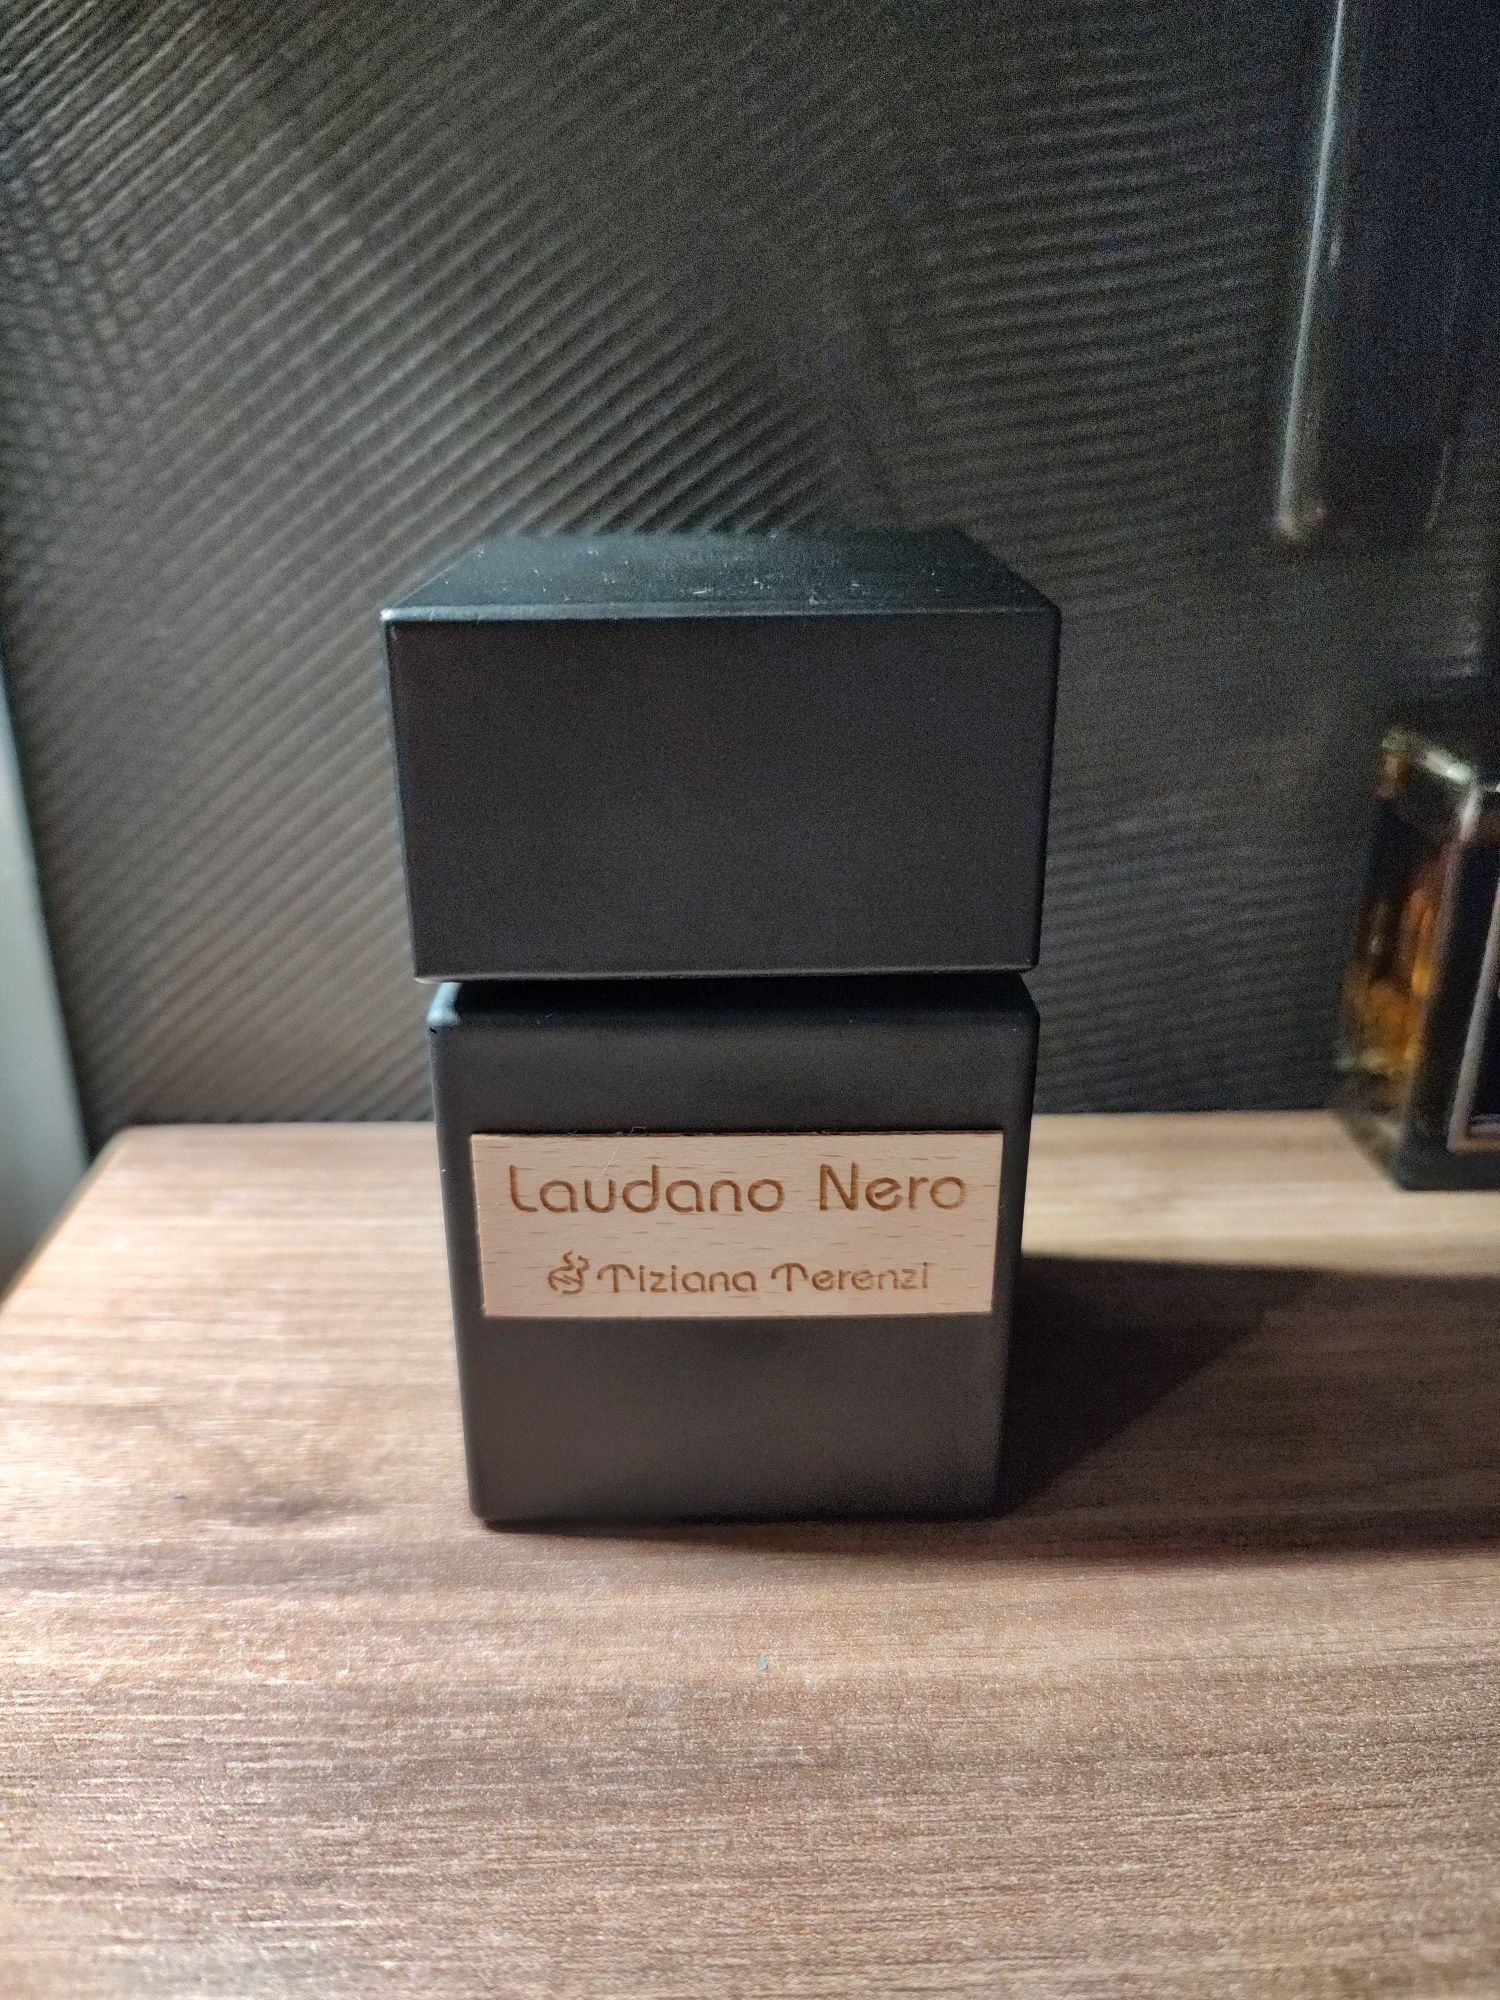 Laudano Nero 100 ml